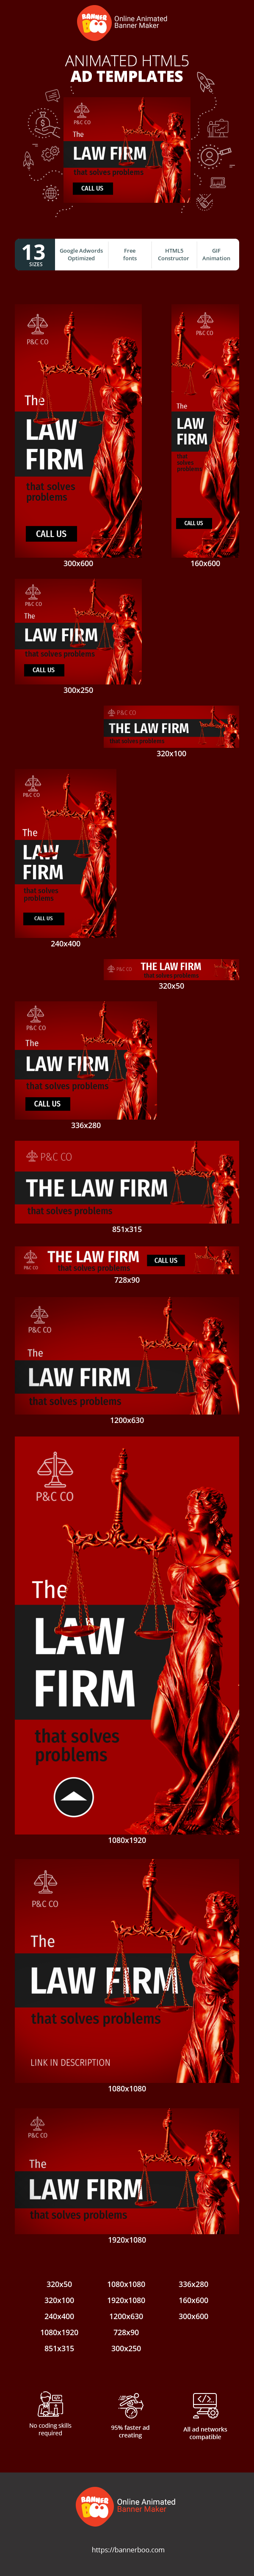 Szablon reklamy banerowej — The Law Firm — That Solves Problems